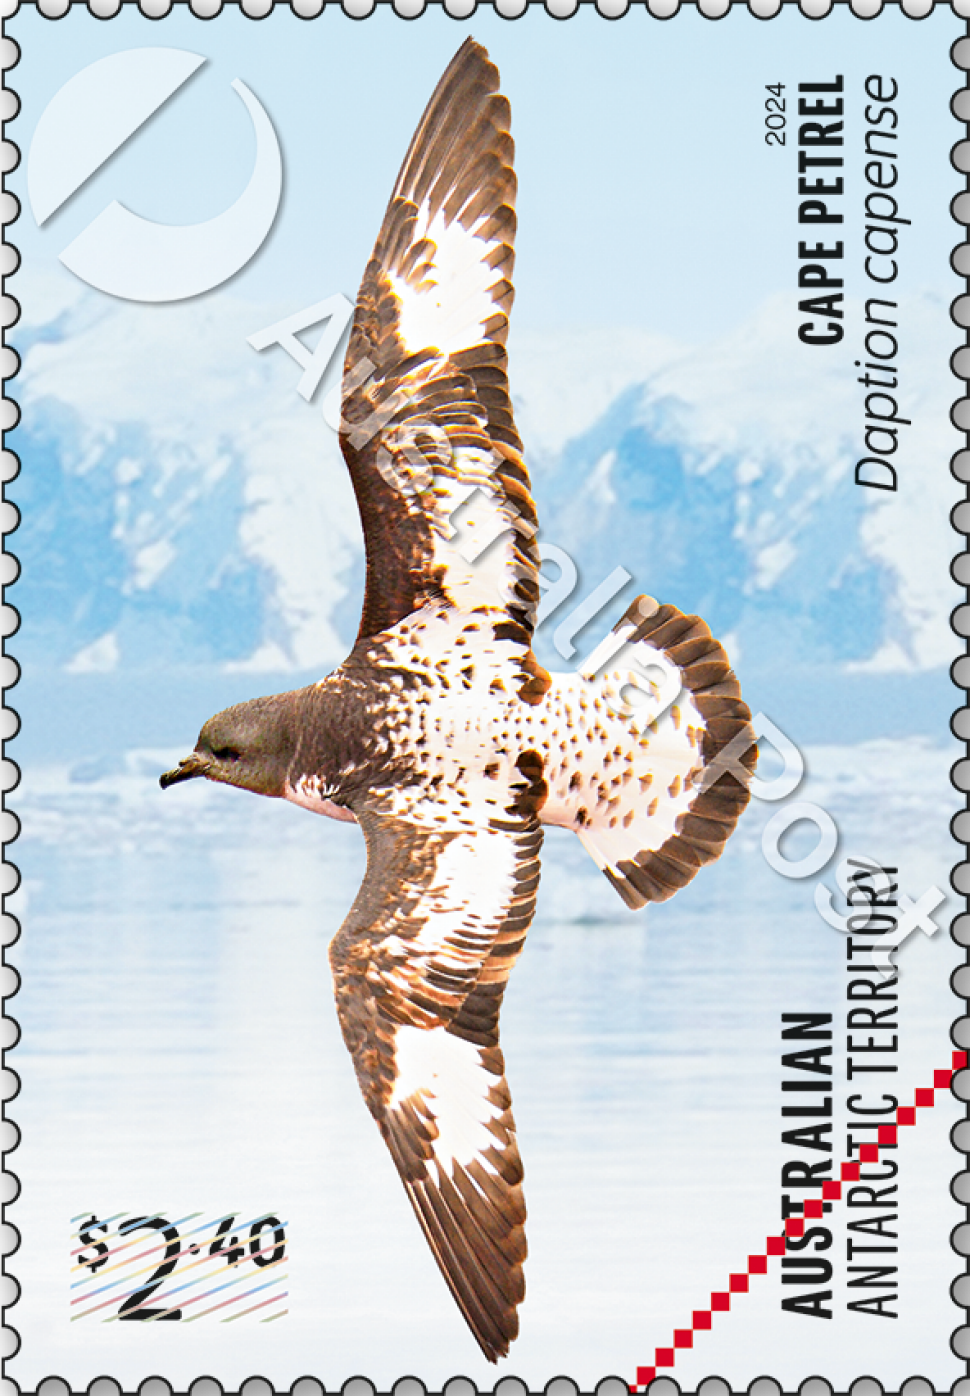 $2.40 Cape Petrel, Daption capense stamp